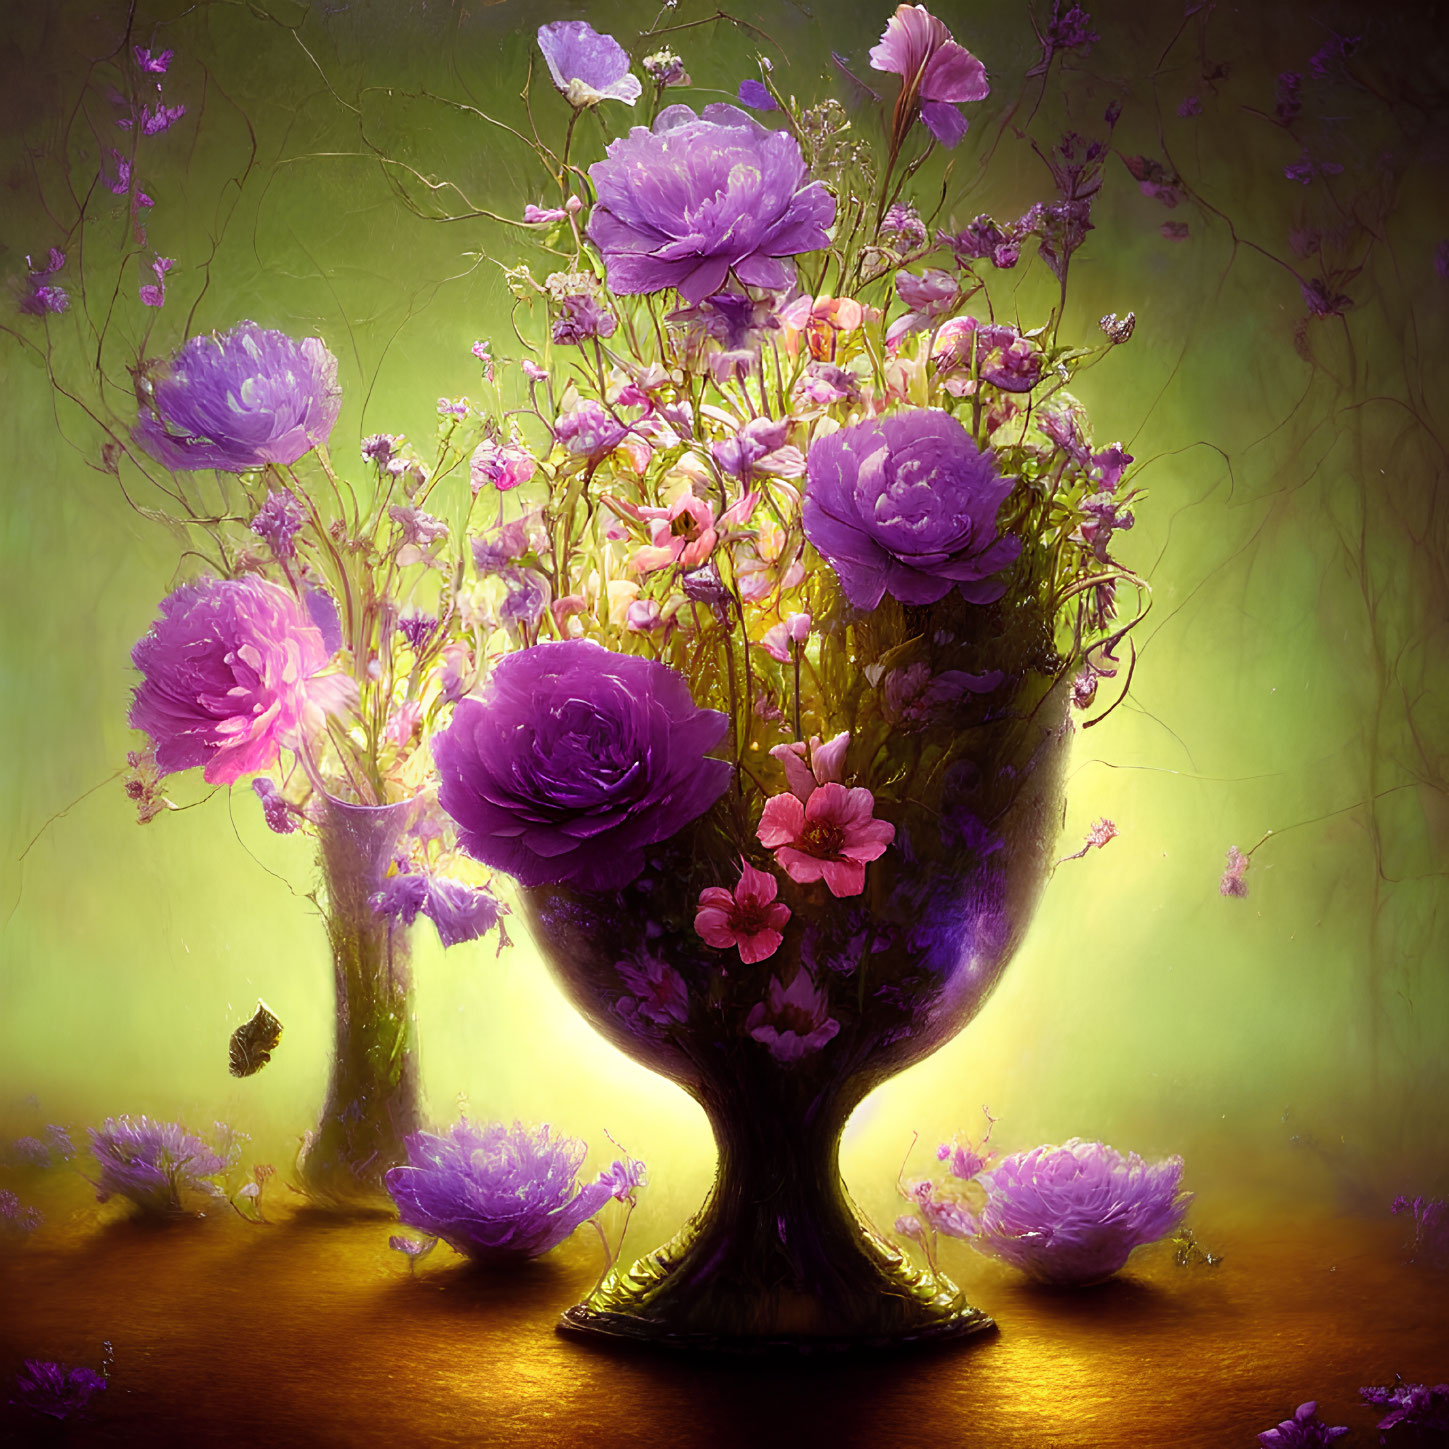 Purple flowers in ornate vase against warm backdrop